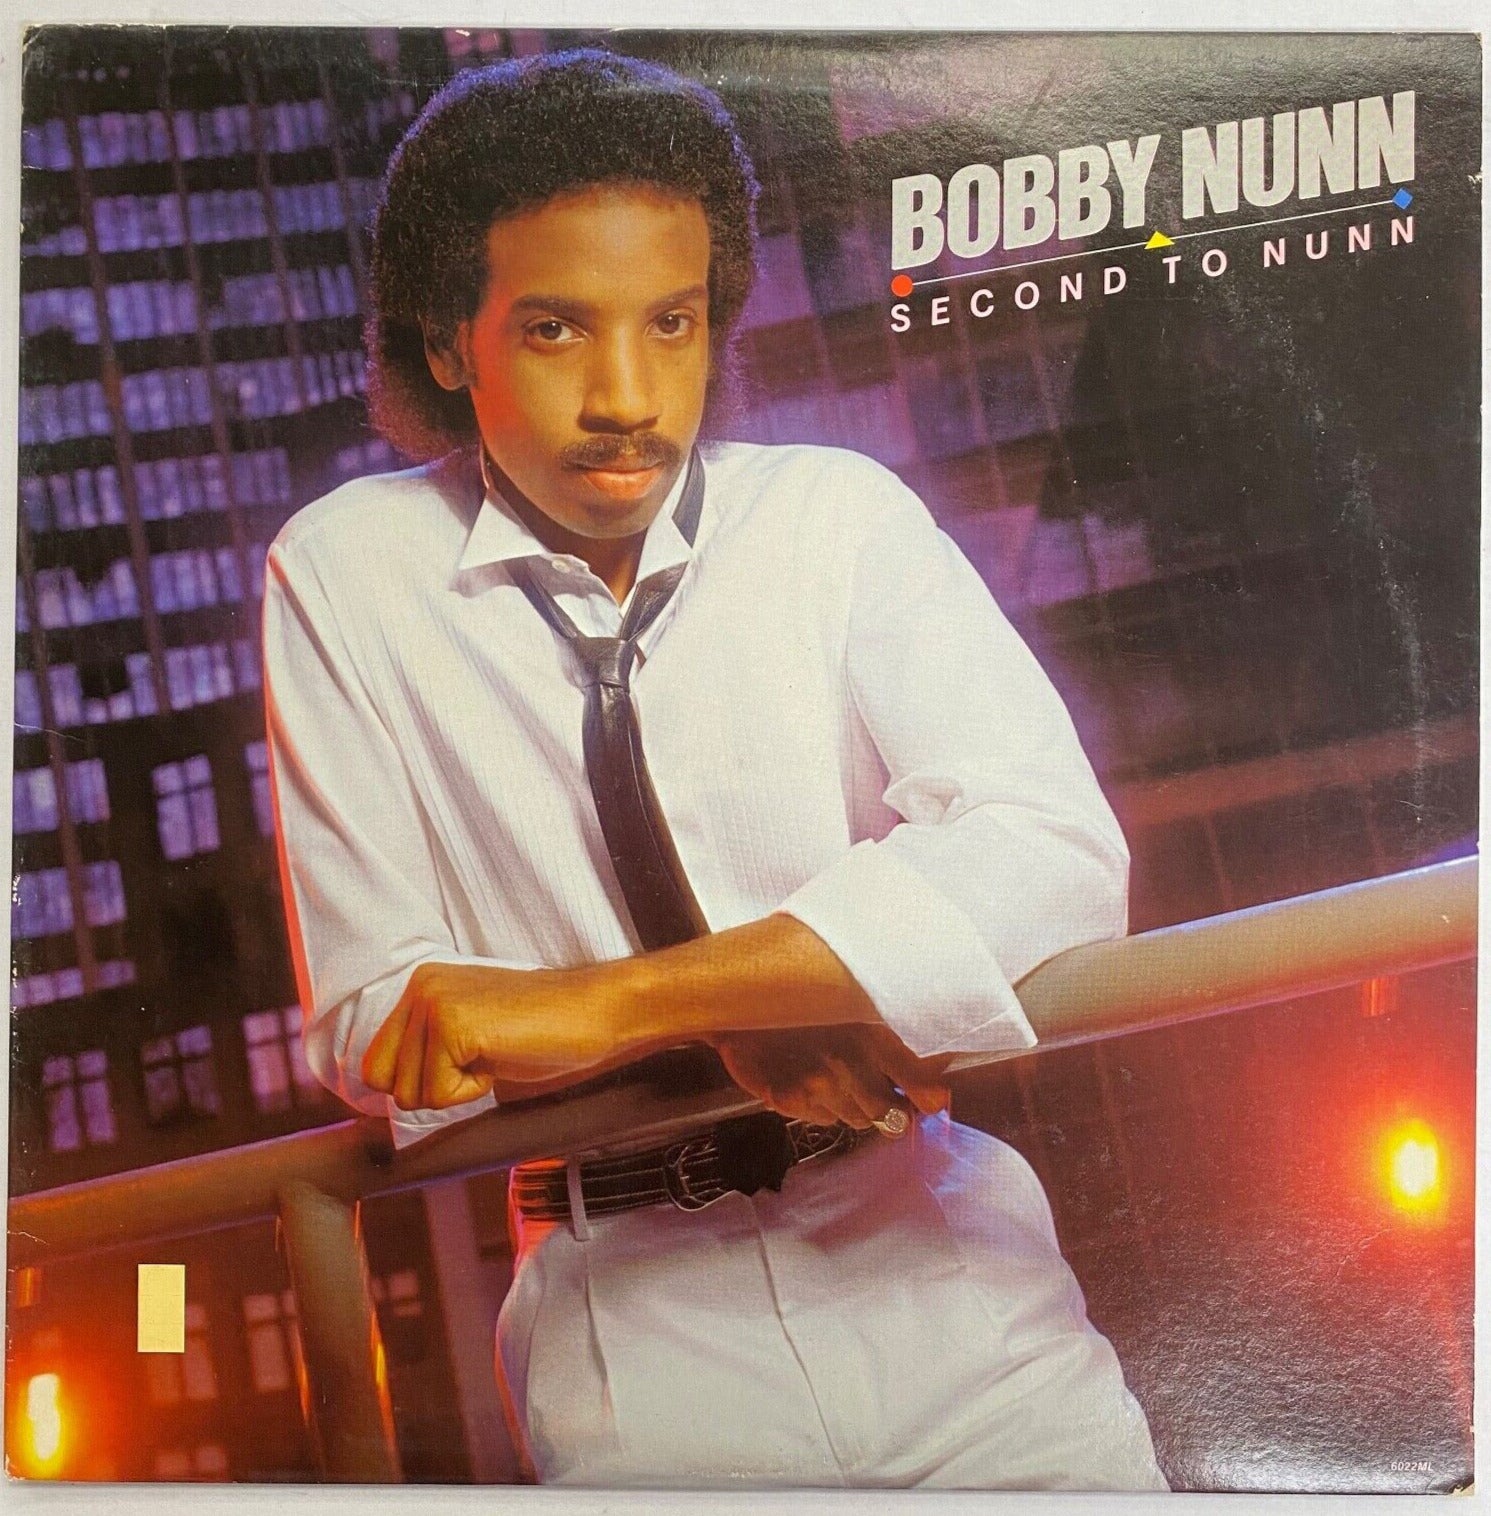 Bobby Nunn Second To Nunn Vintage Vinyl Record 1982 Motown LP